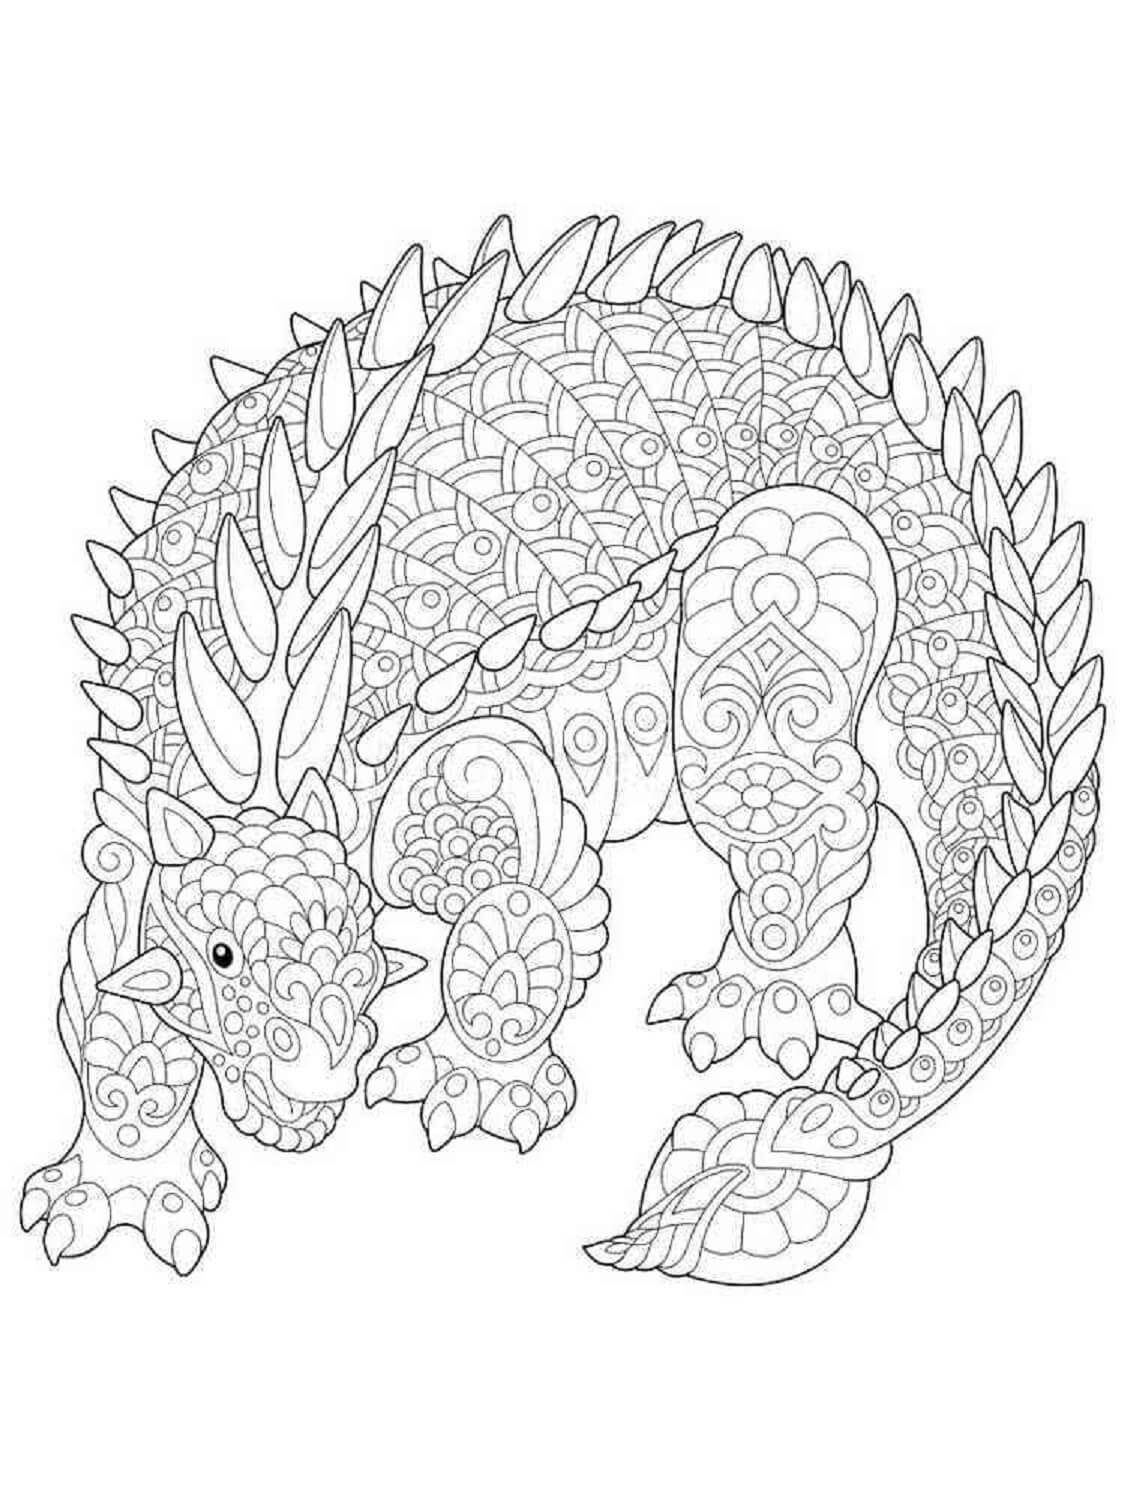 Mandala Dinosaur Coloring Page - Sheet 1 Mandalas